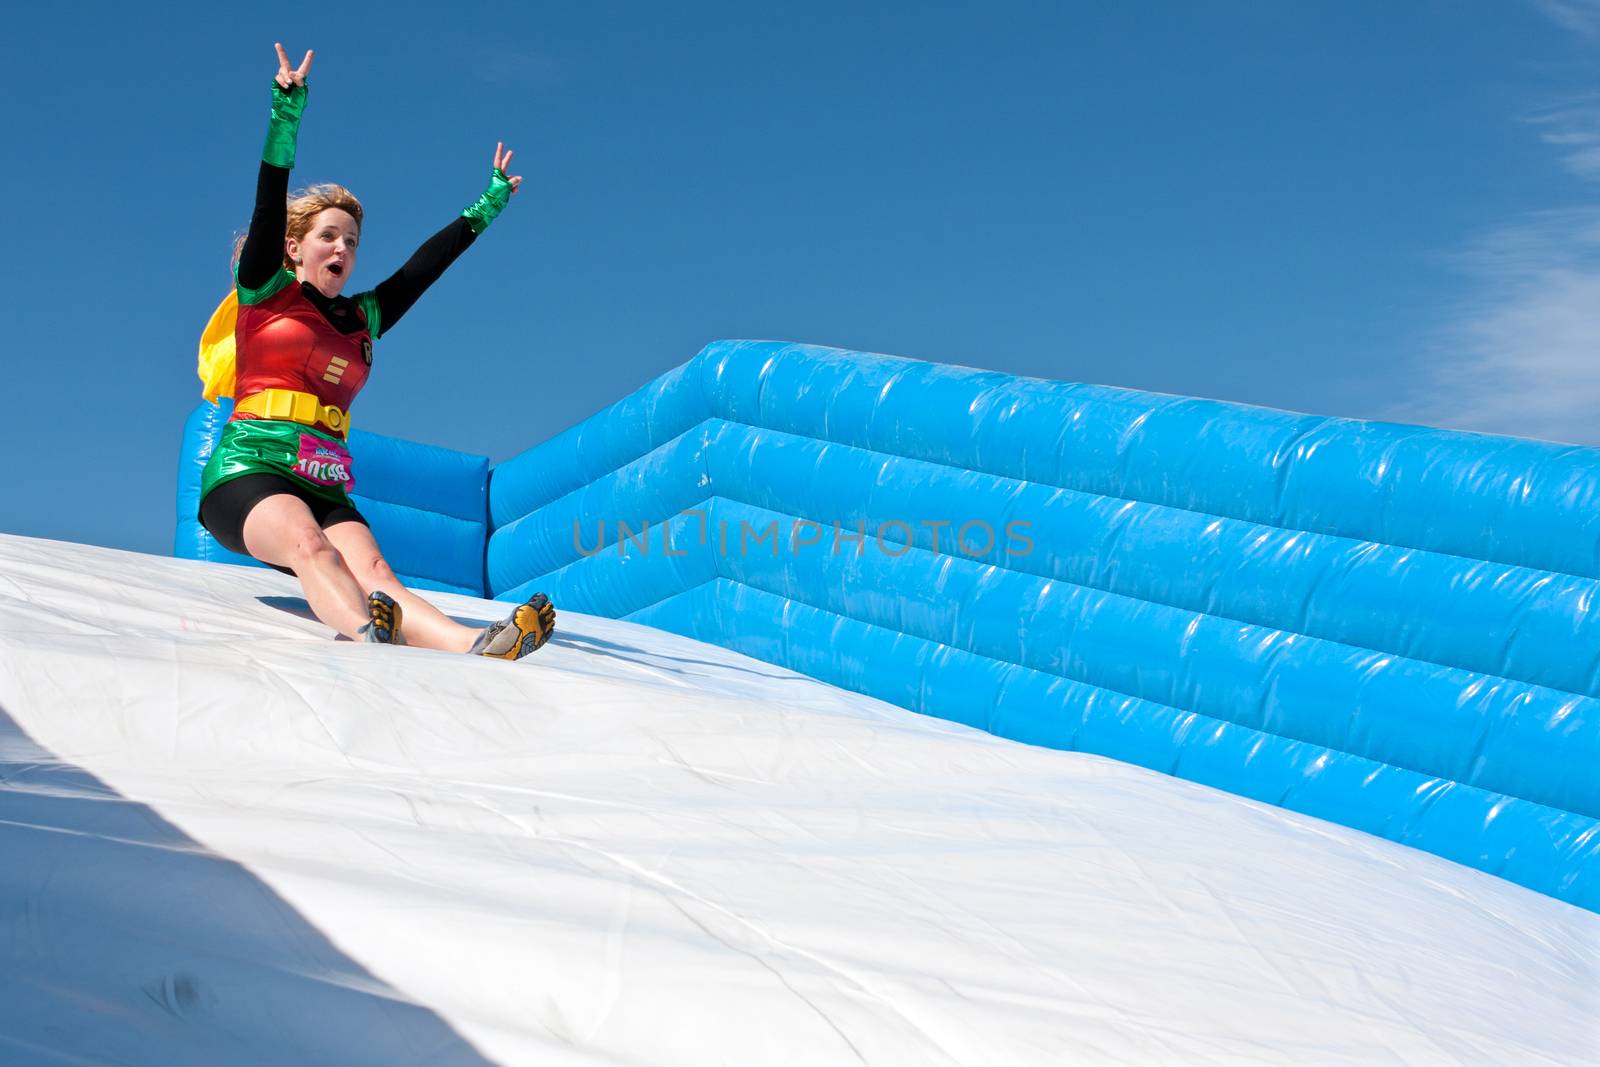 Woman Wearing Superhero Costume Goes Down Obstacle Race Slide by BluIz60